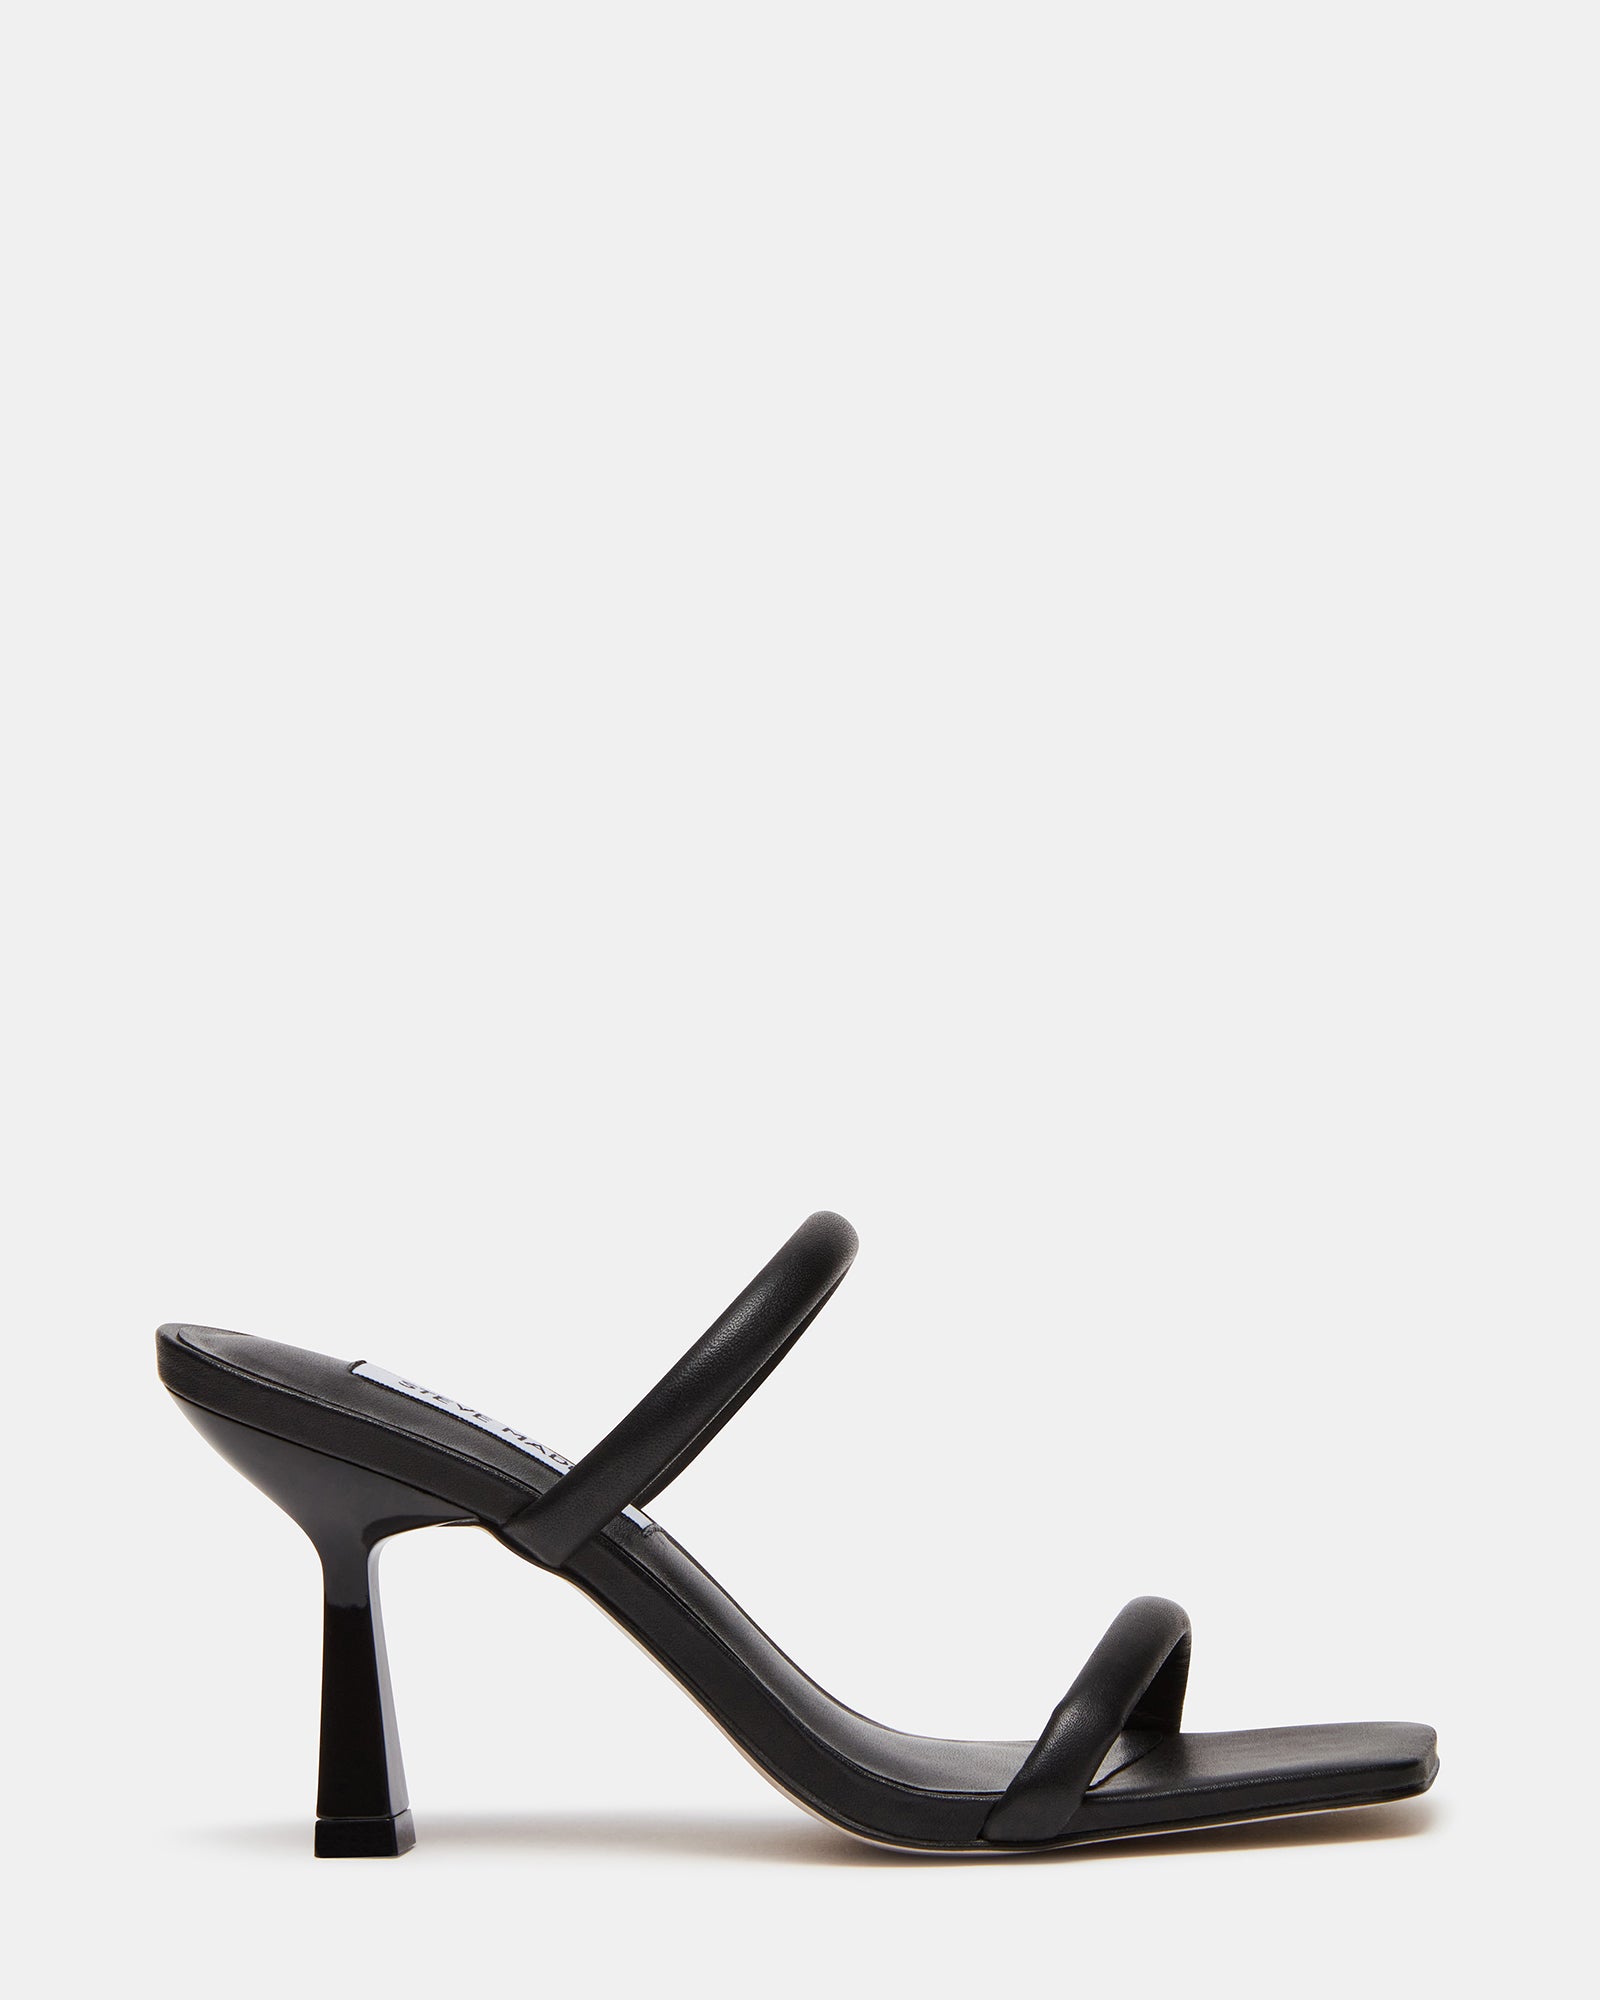 Women's Mules | Designer Mule Heels, Sandals, Flats, Loafers & Moretrends- mules – Steve Madden